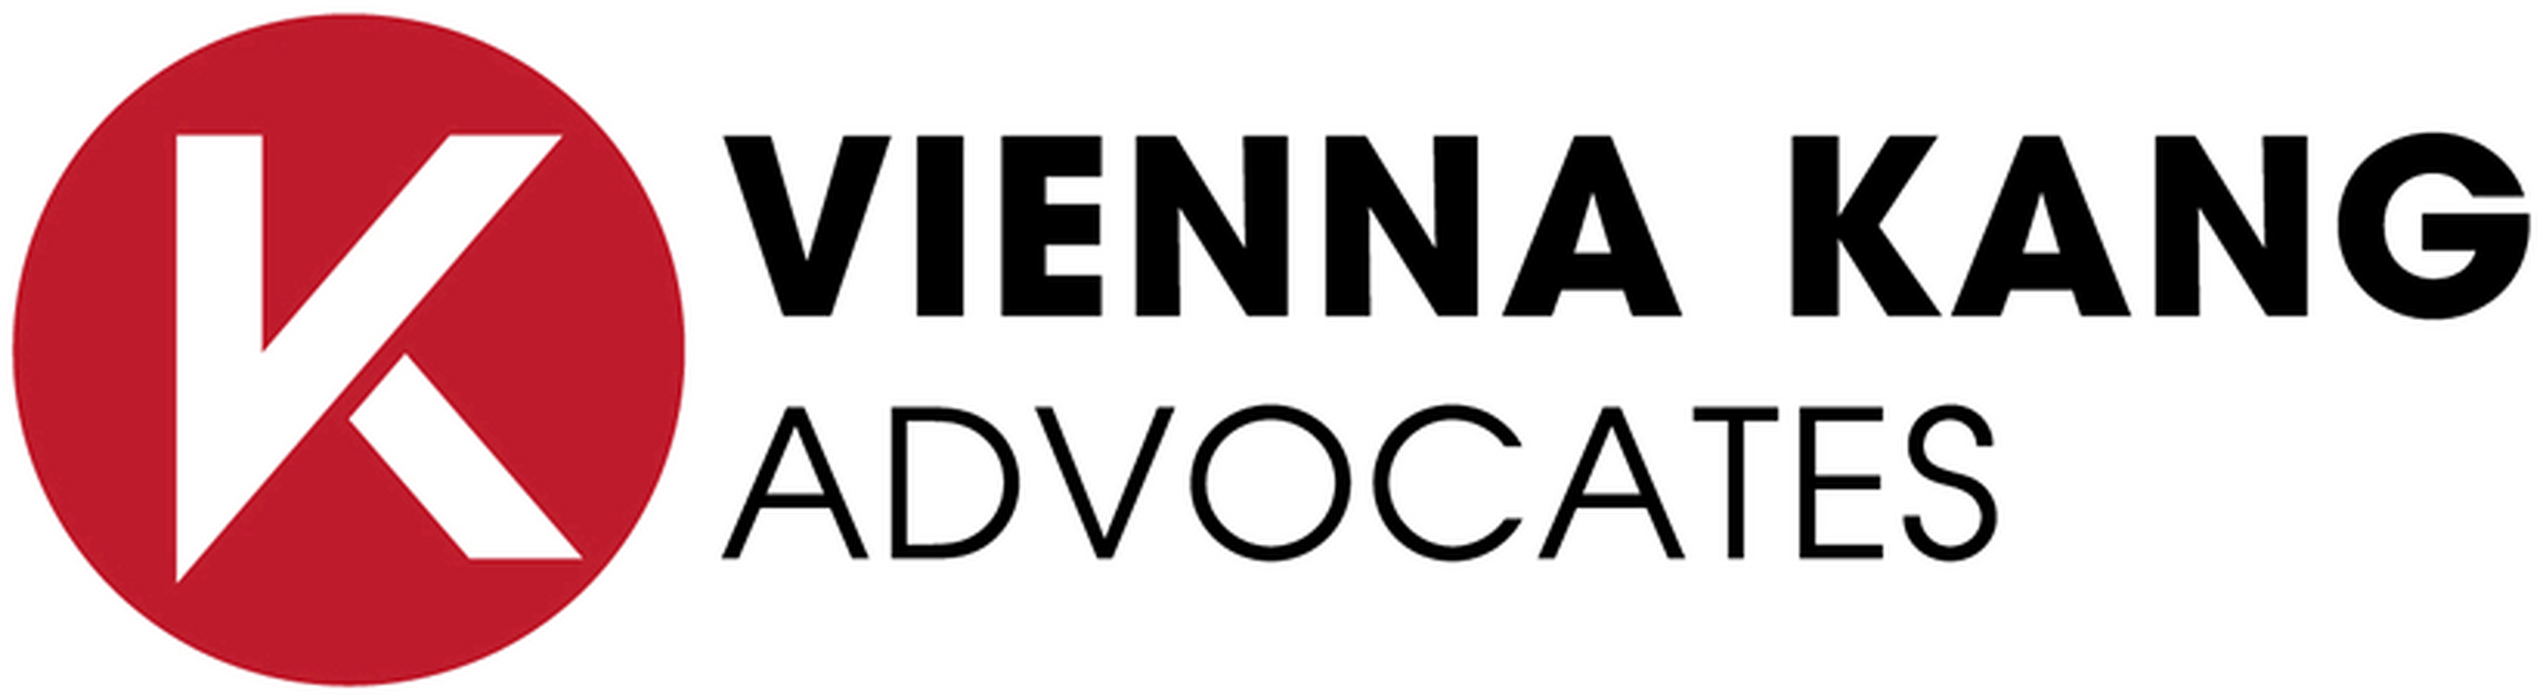 vienna-kang-advocates